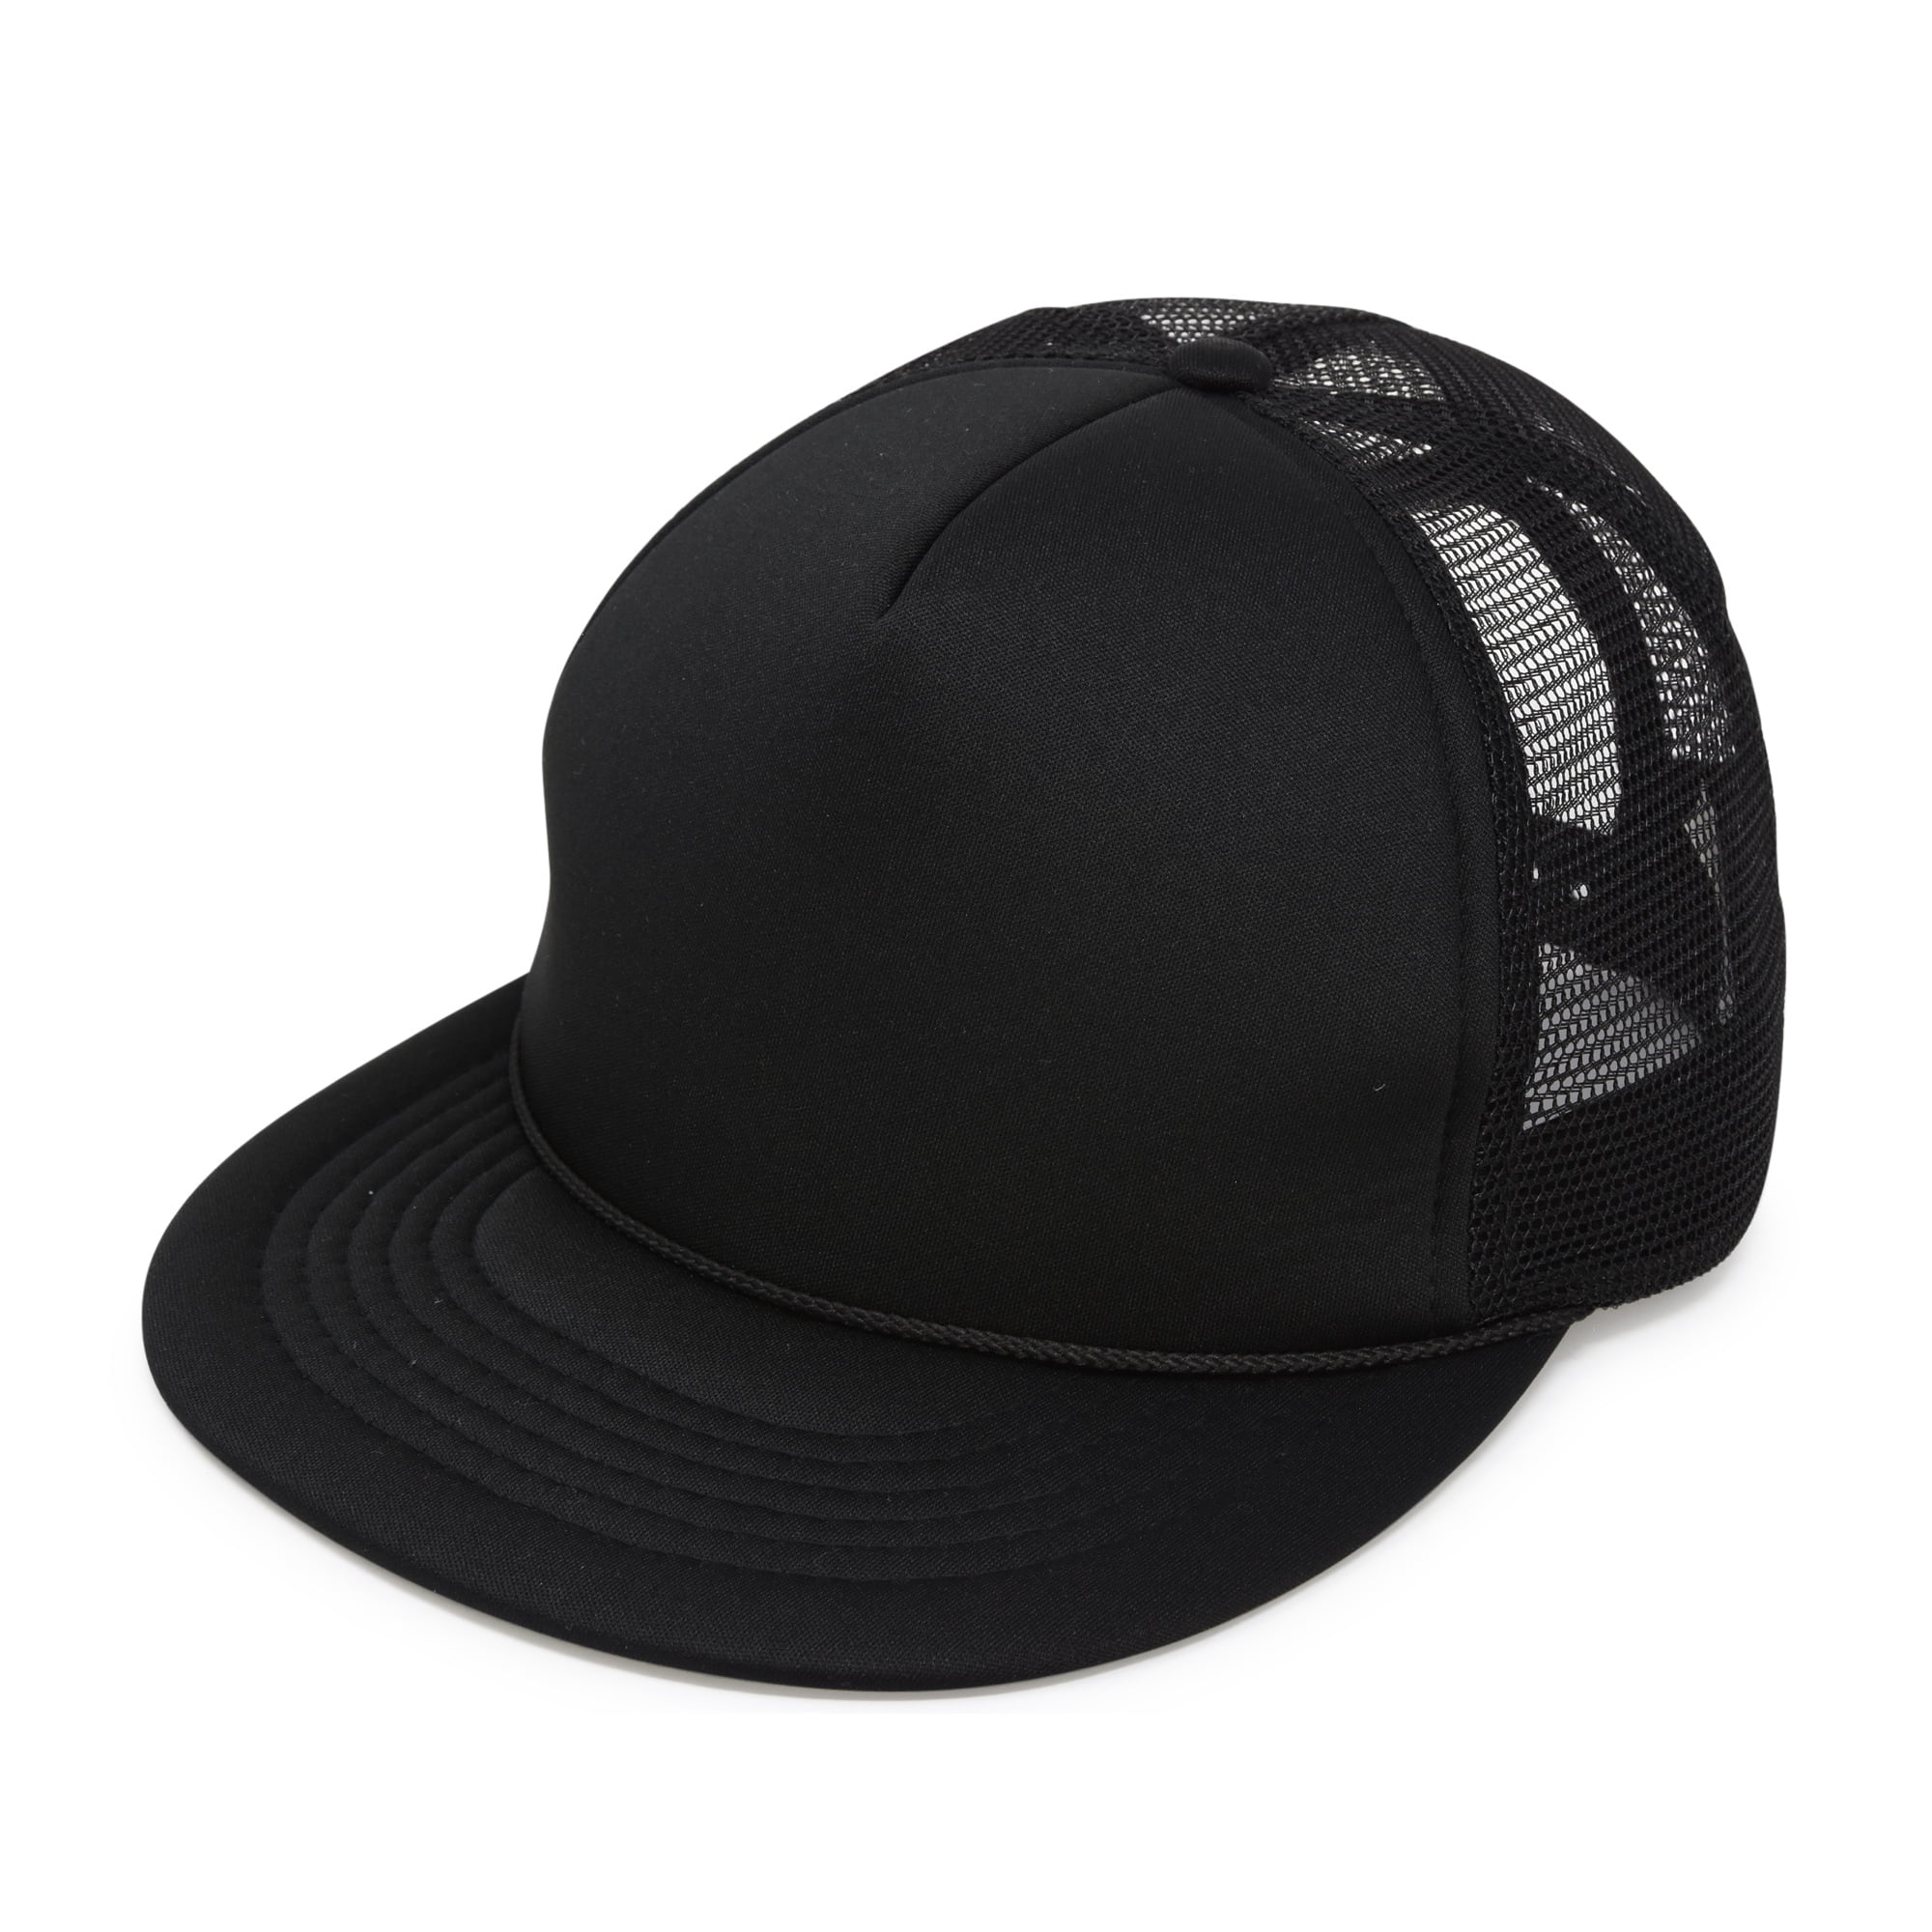 Solid Black Mesh Curved Bill 5 Panel Snapback Blank Trucker Baseball Cap Hat 